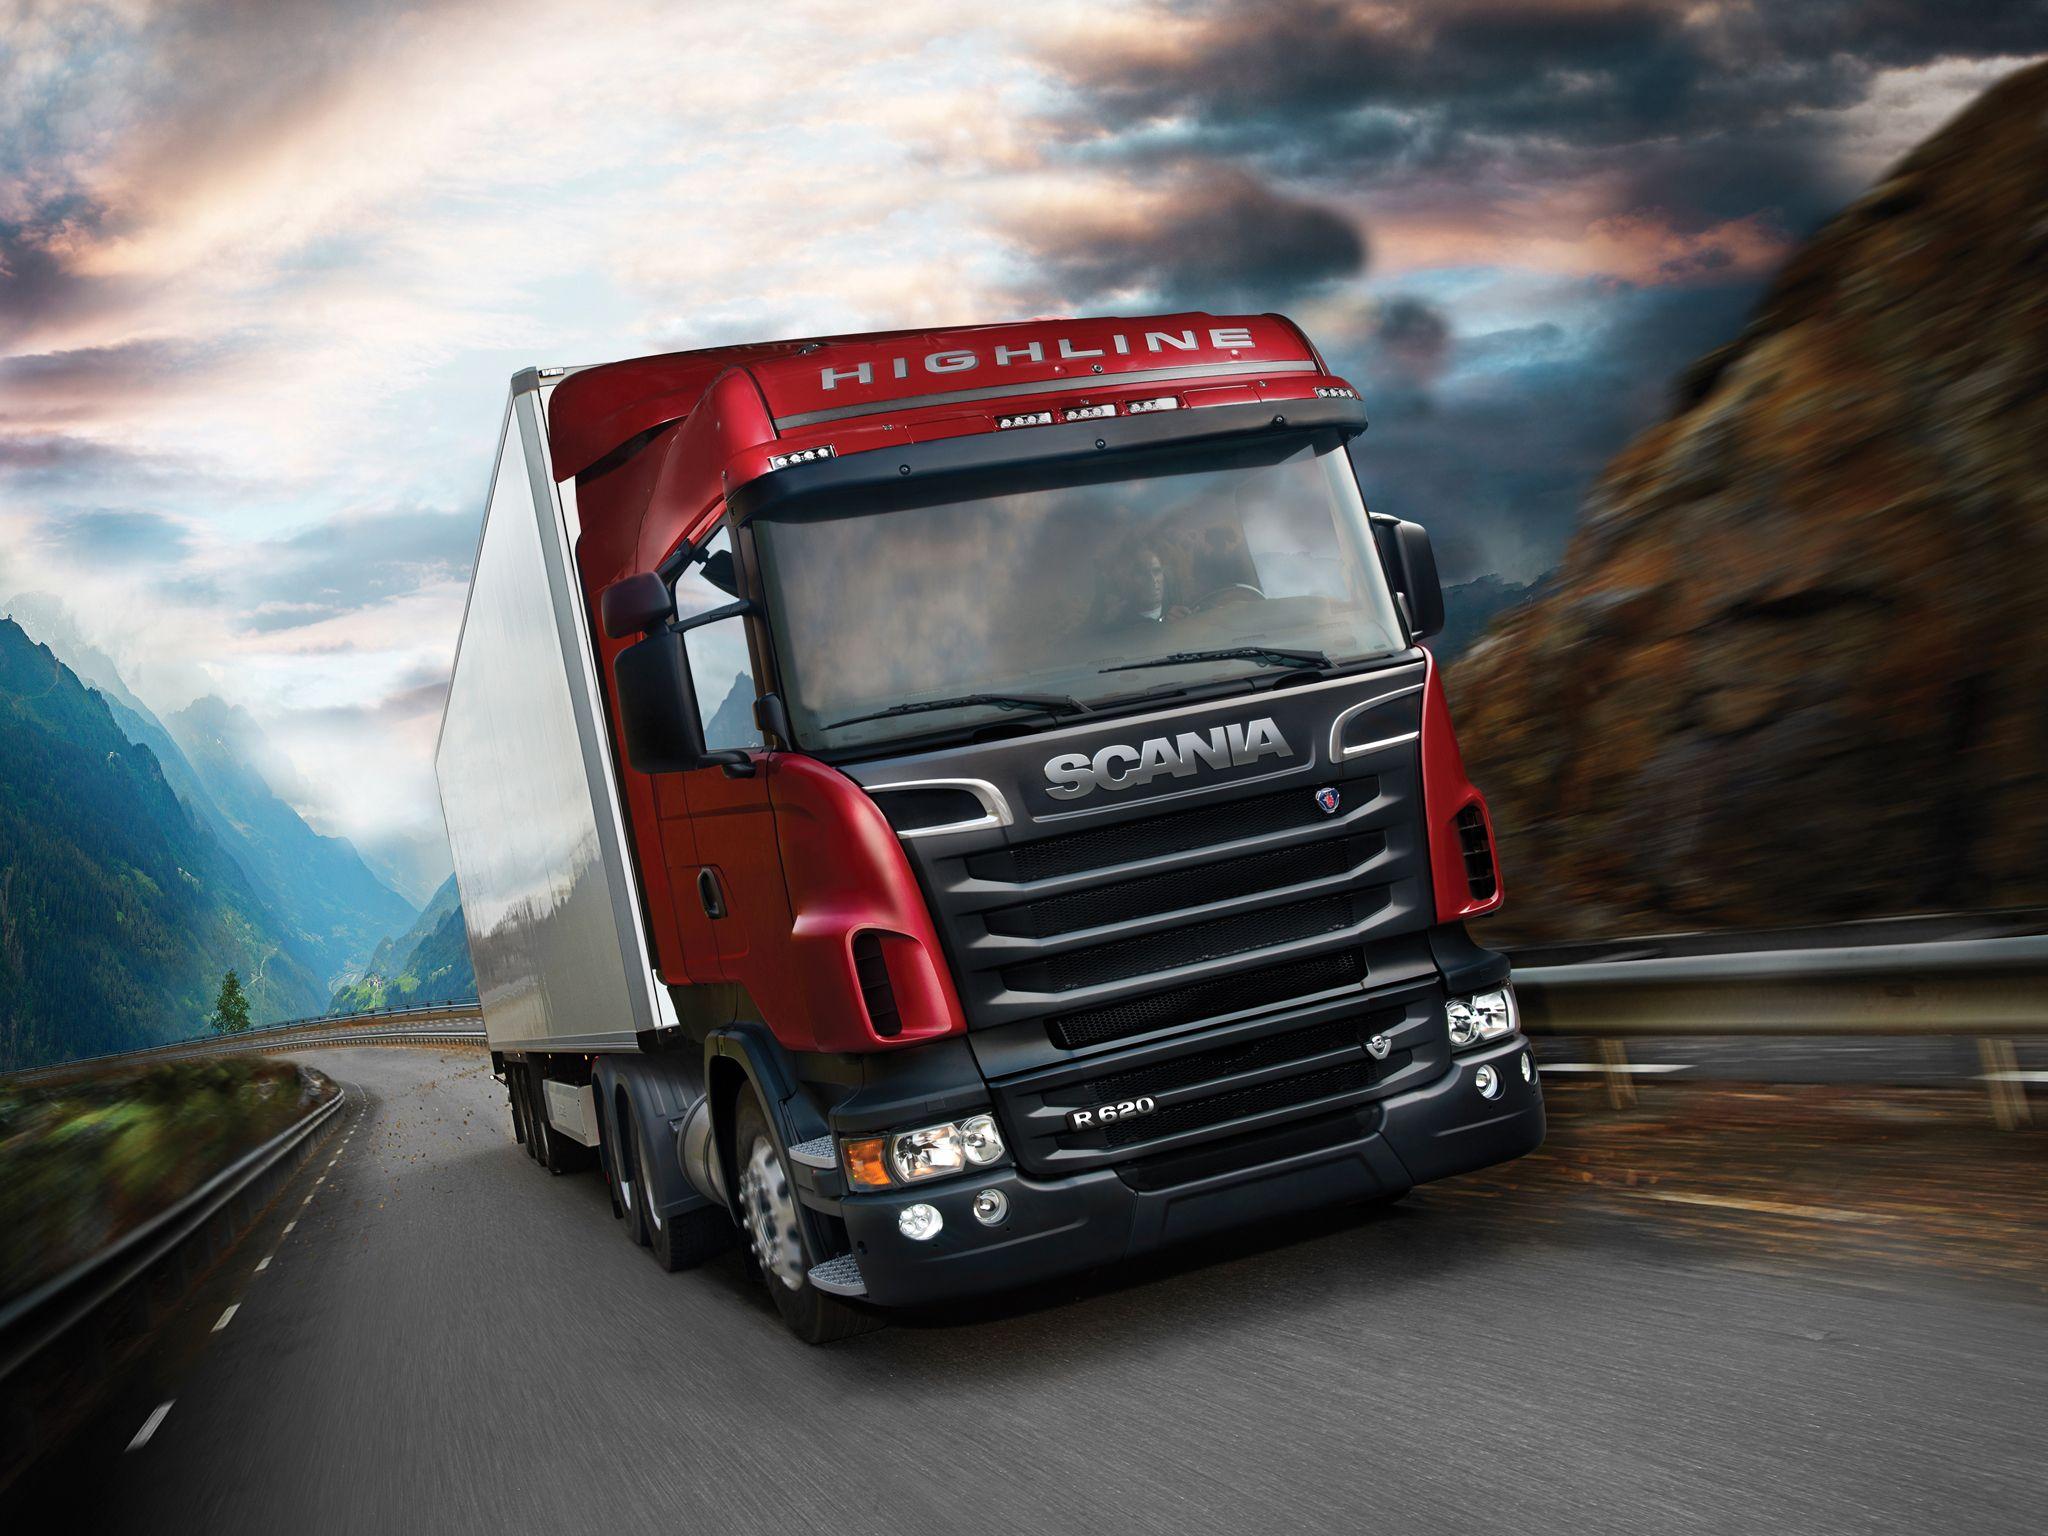 Truck Scania Wallpaper HD Desktop. All About Gallery Car